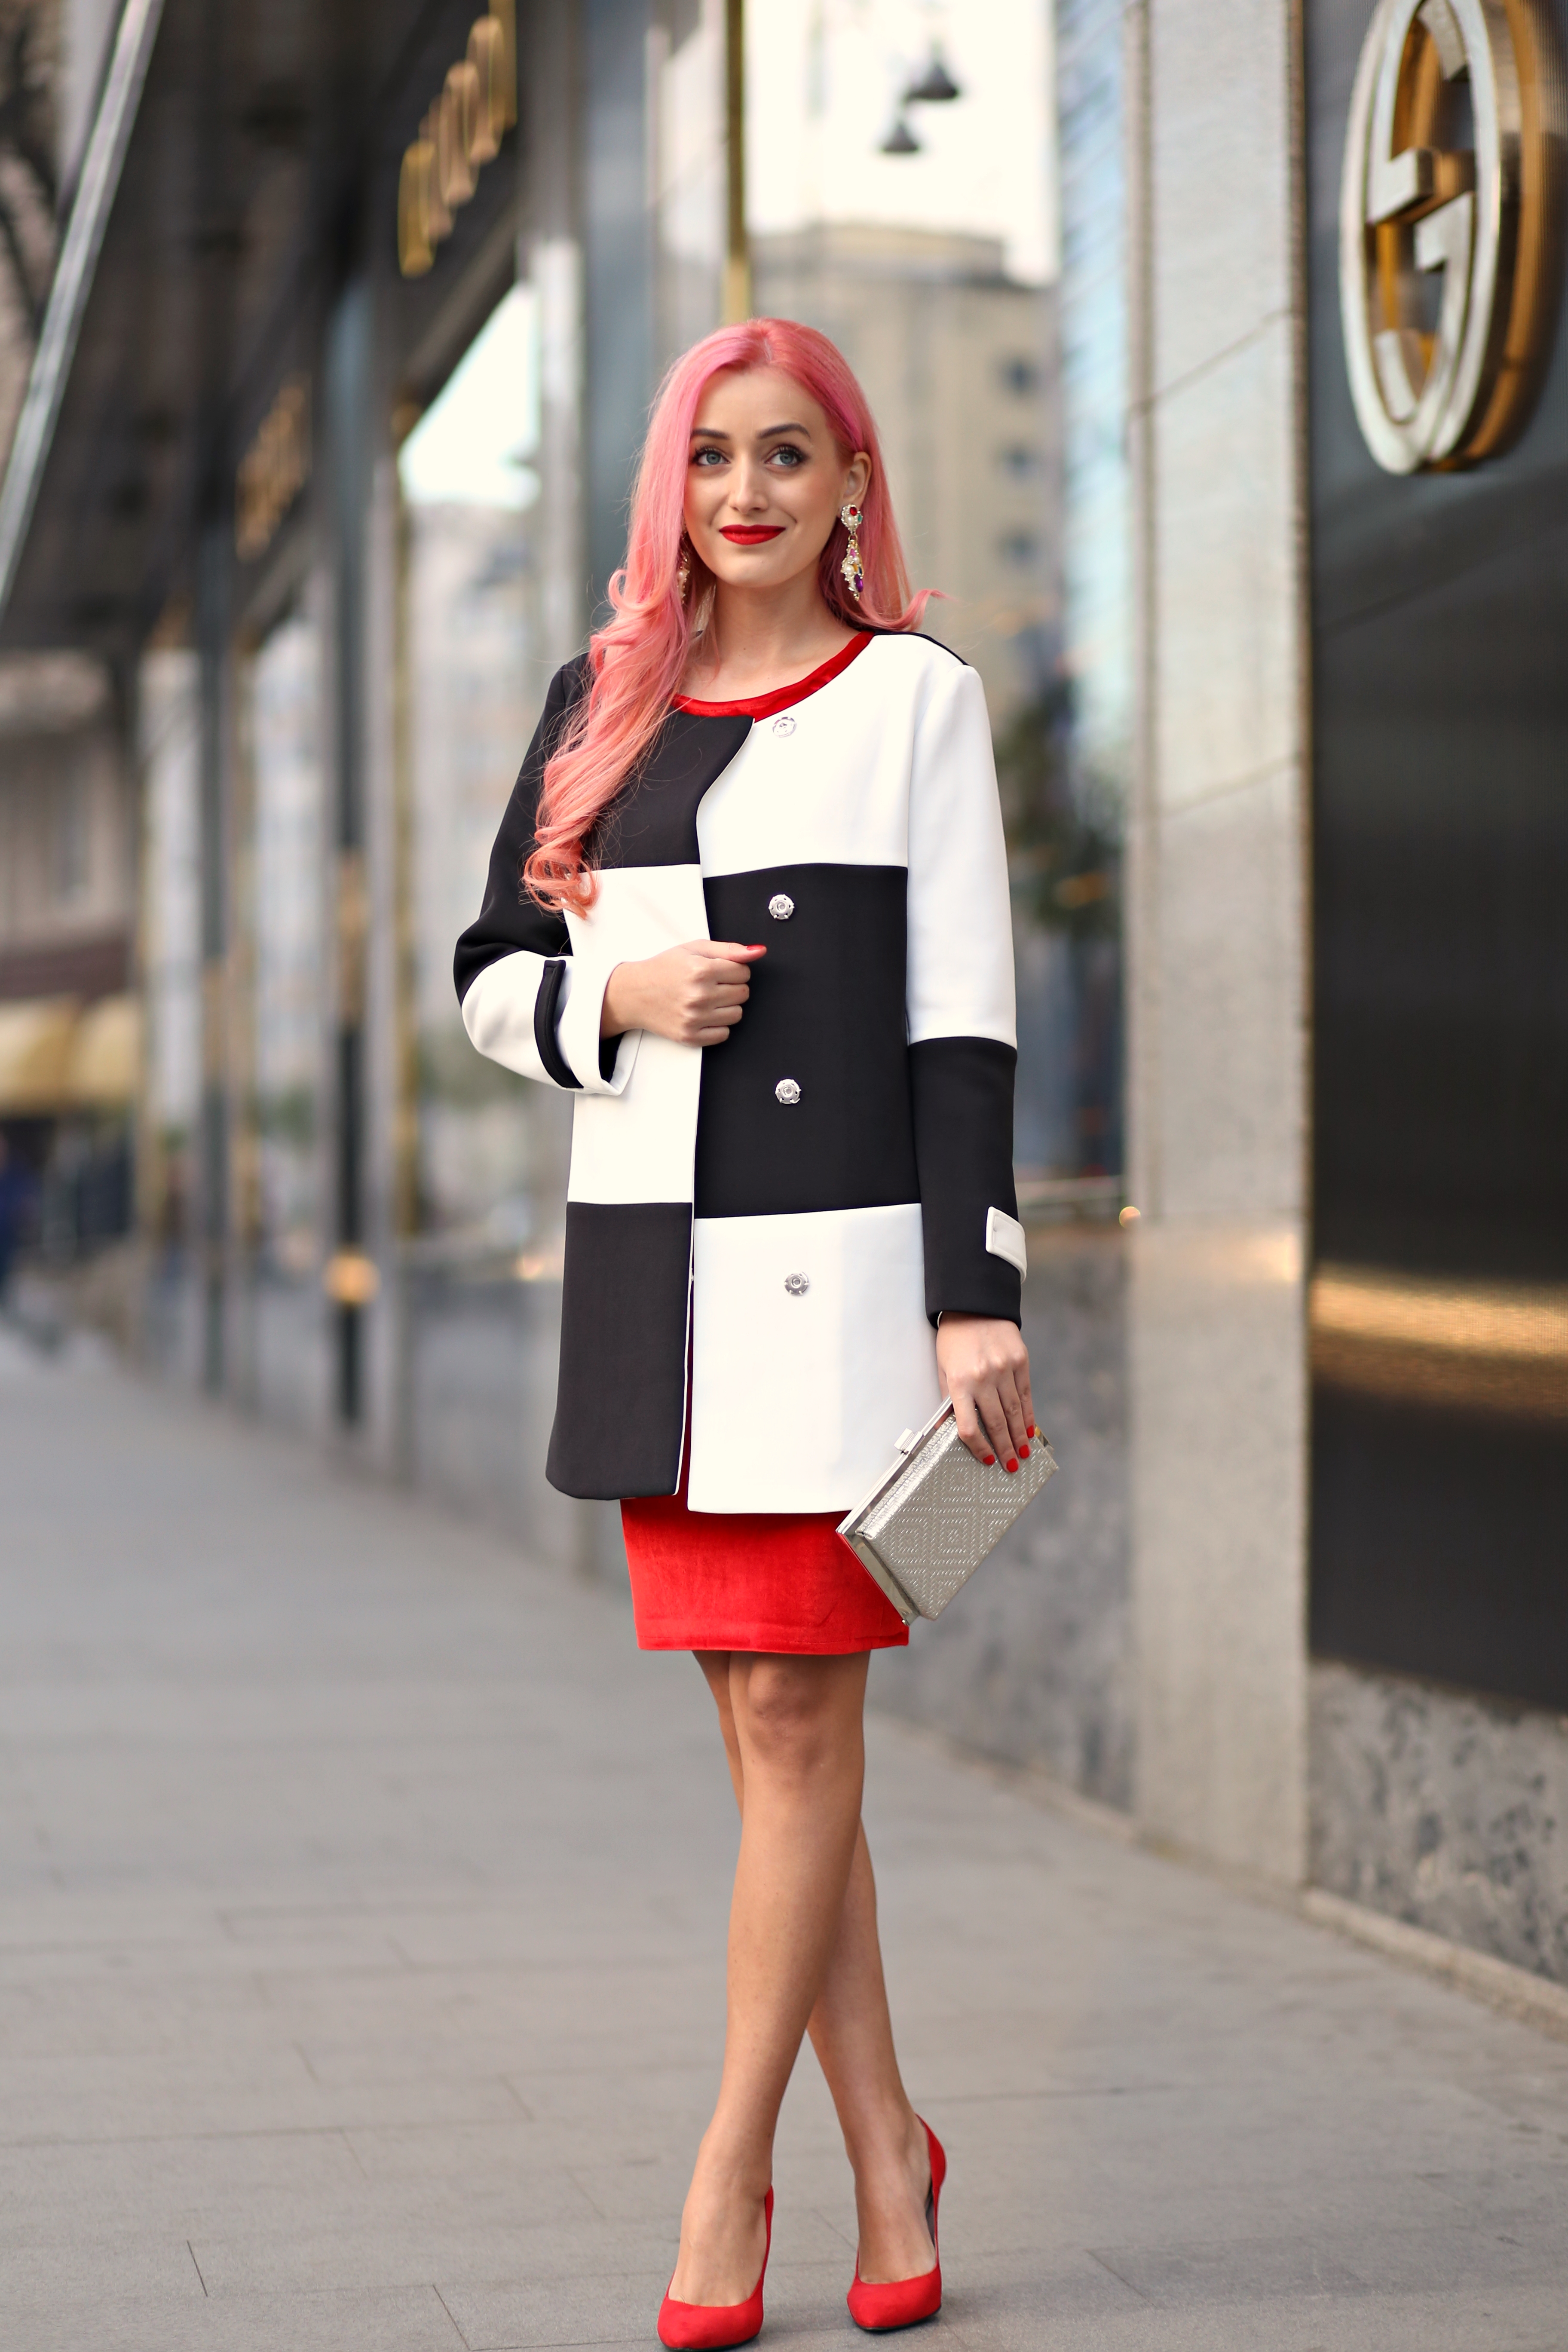 christmassy_outfit_red_velvet_dress_black_white_coat_she_in_madalina_misu (11)